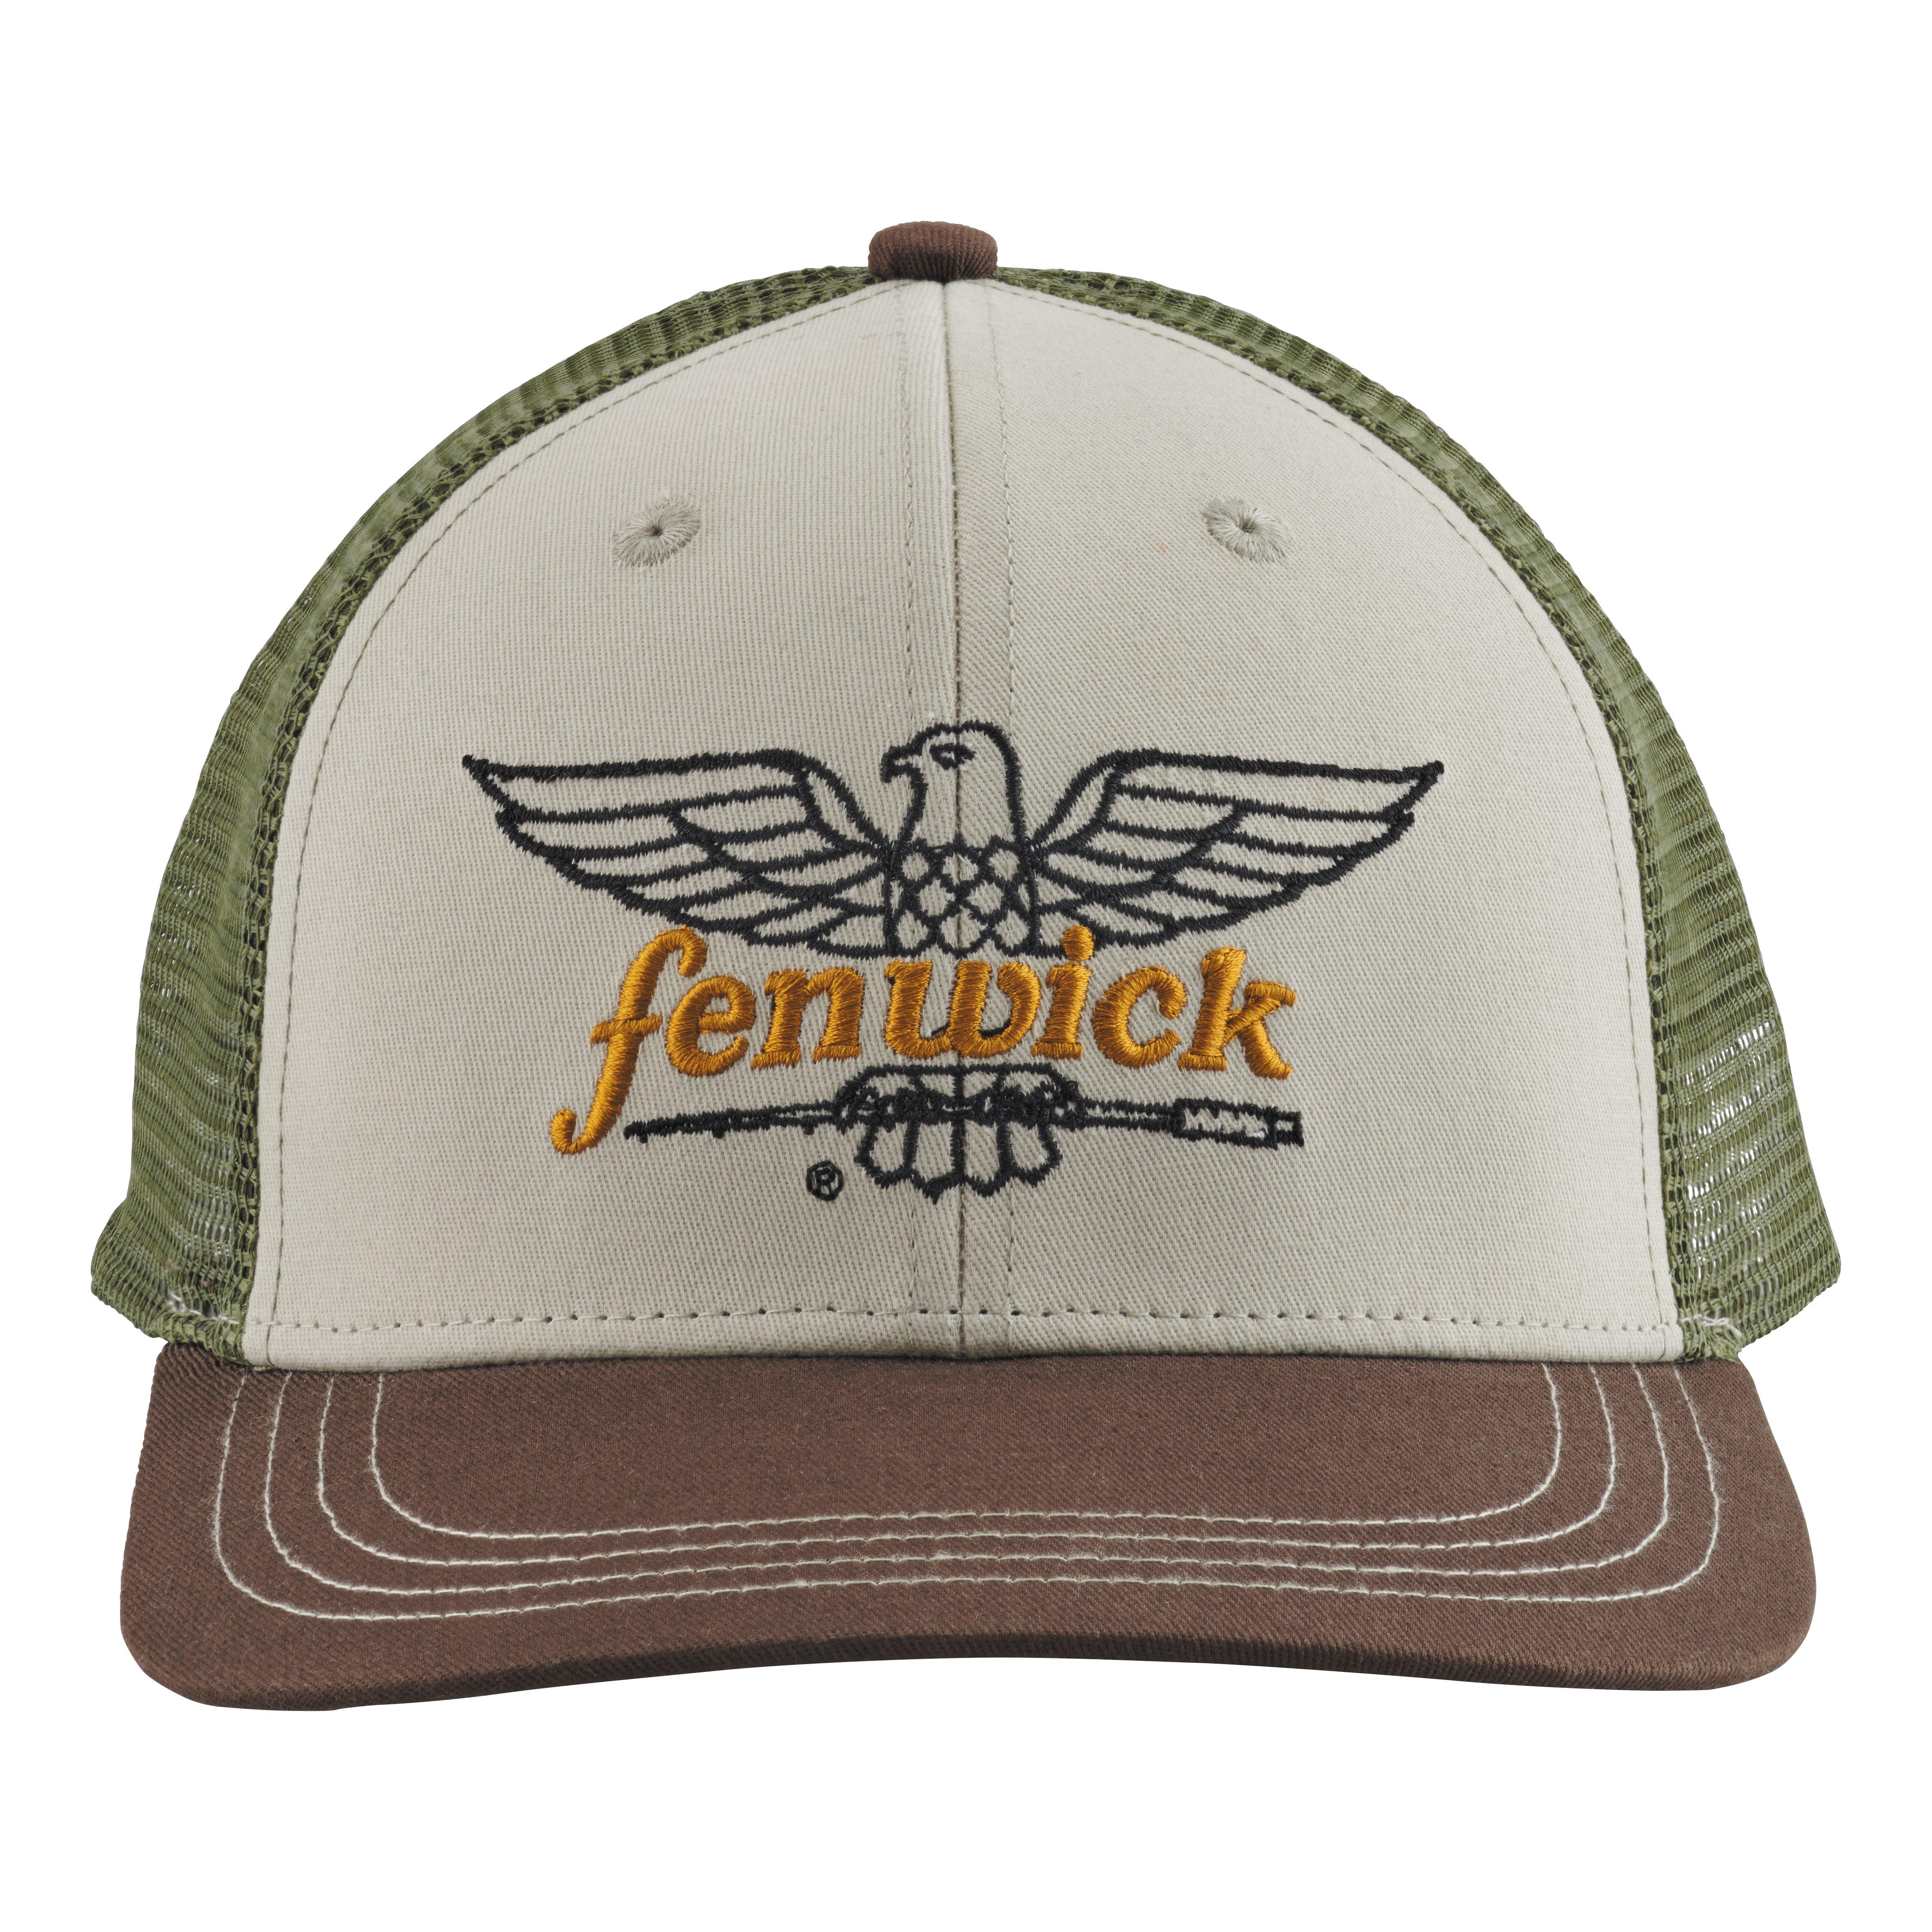 Fenwick Original Trucker Hat - Pure Fishing